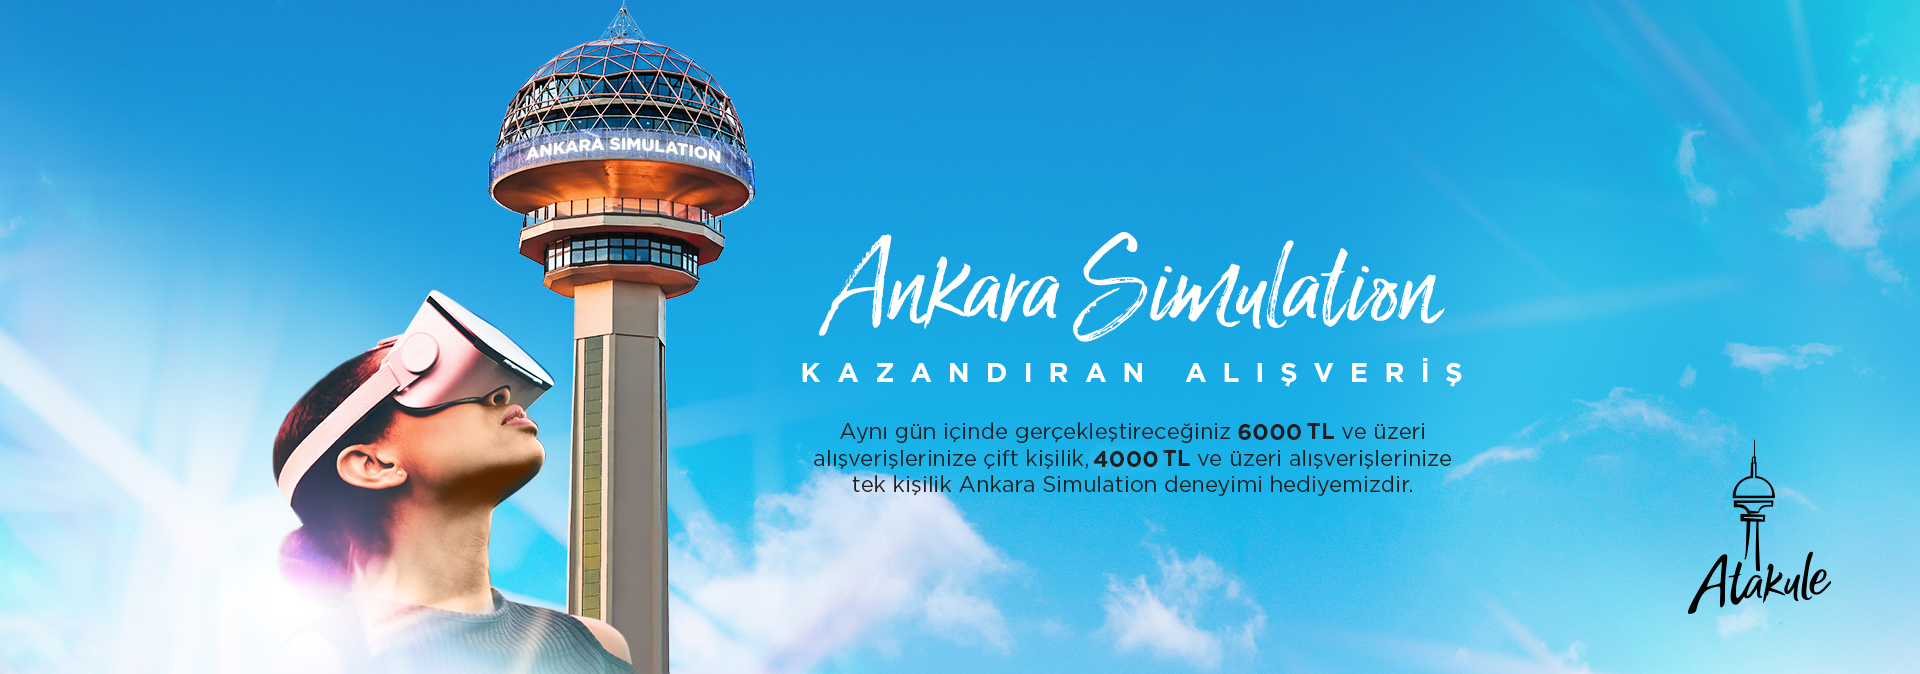 Ankara Simulation Hediye